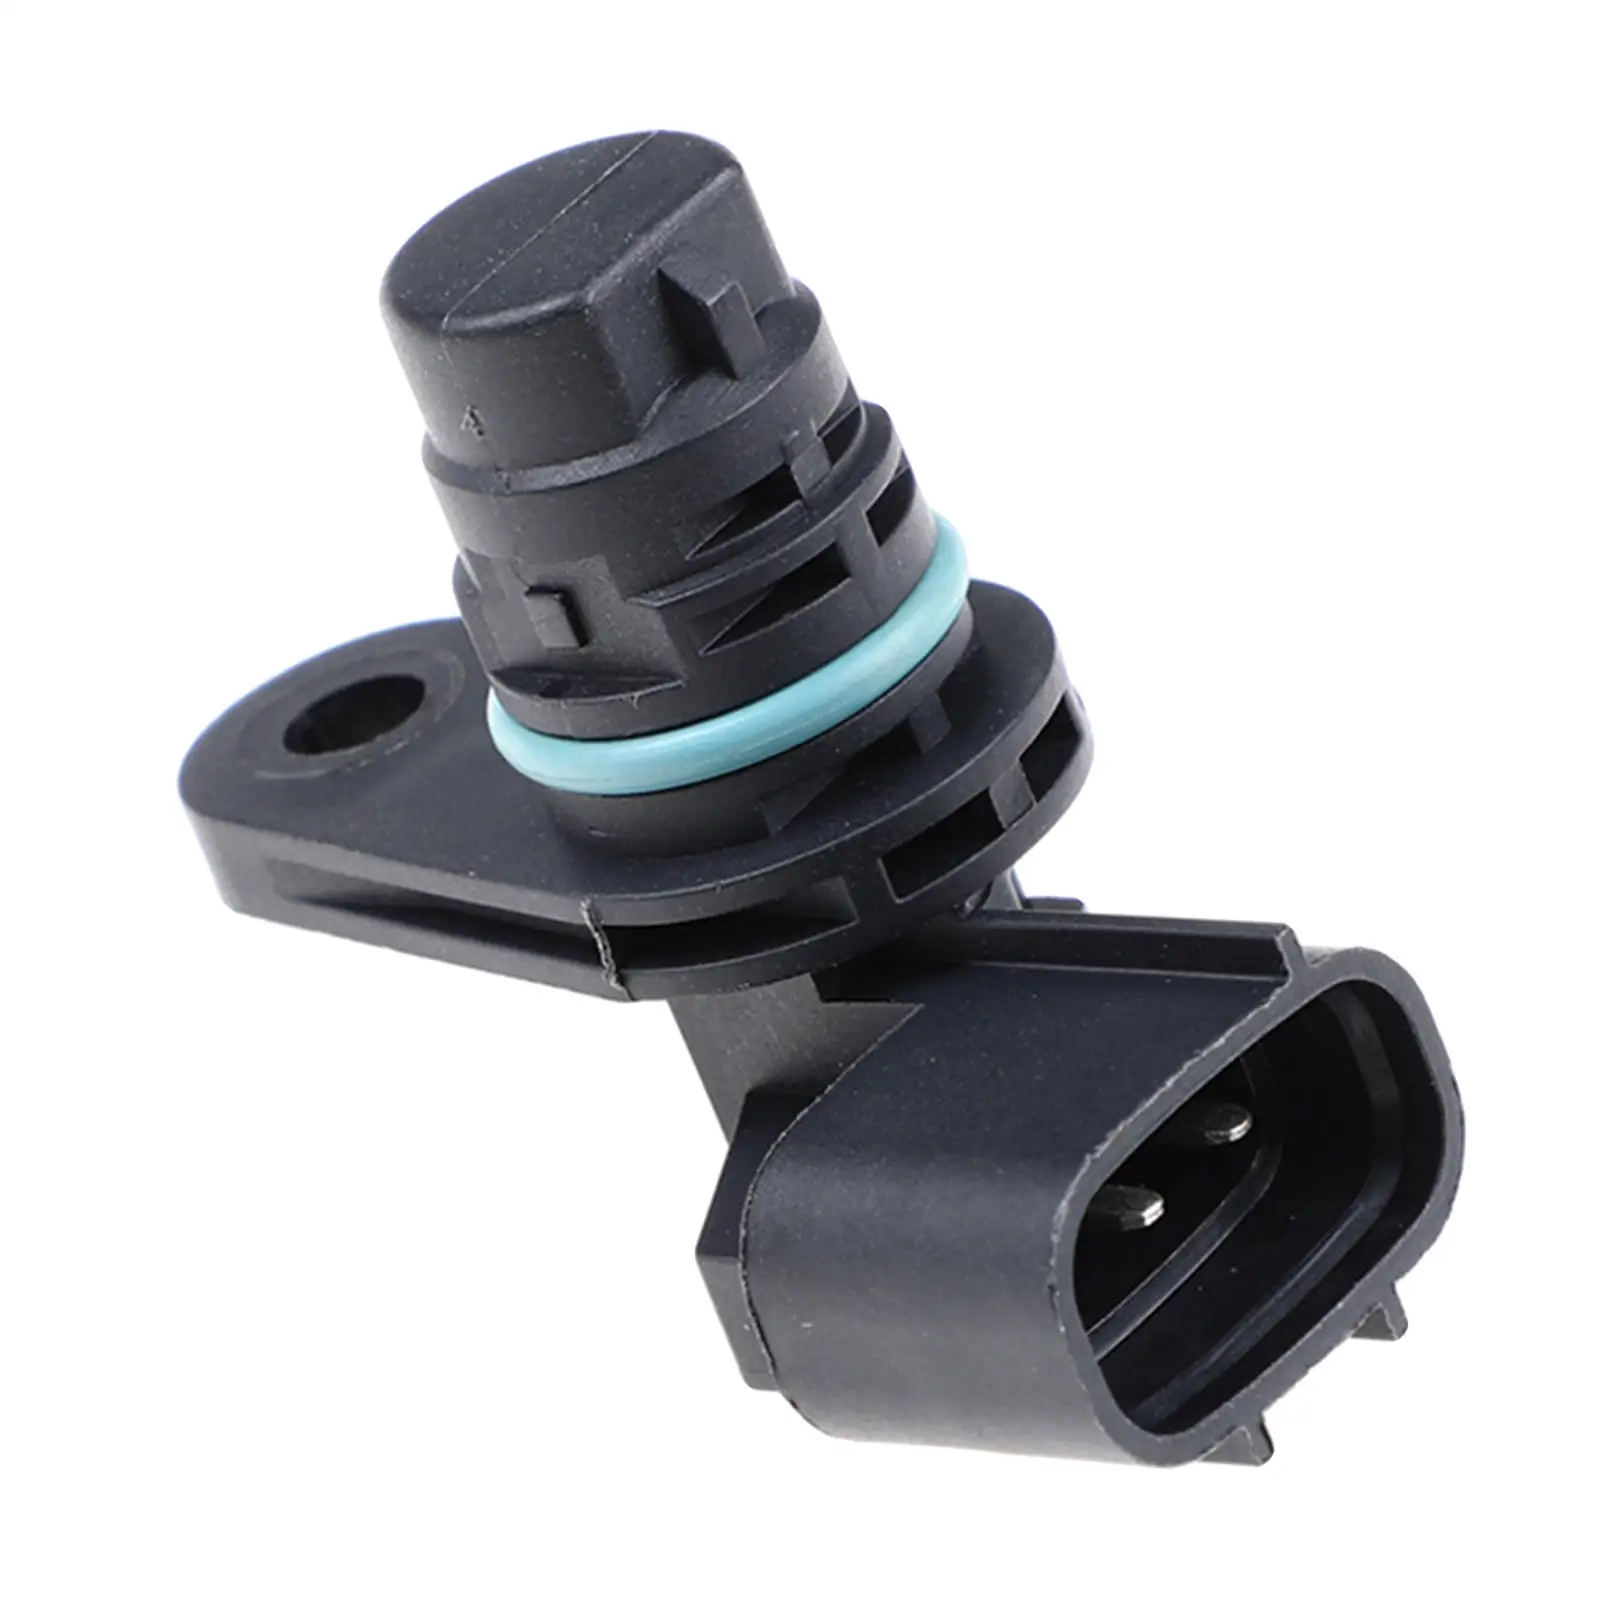 Car Camshaft Position Sensor Replace Part Accessory Fit for Hyundai Sonata 2.4L 3935025010 2.0L 39350-25010